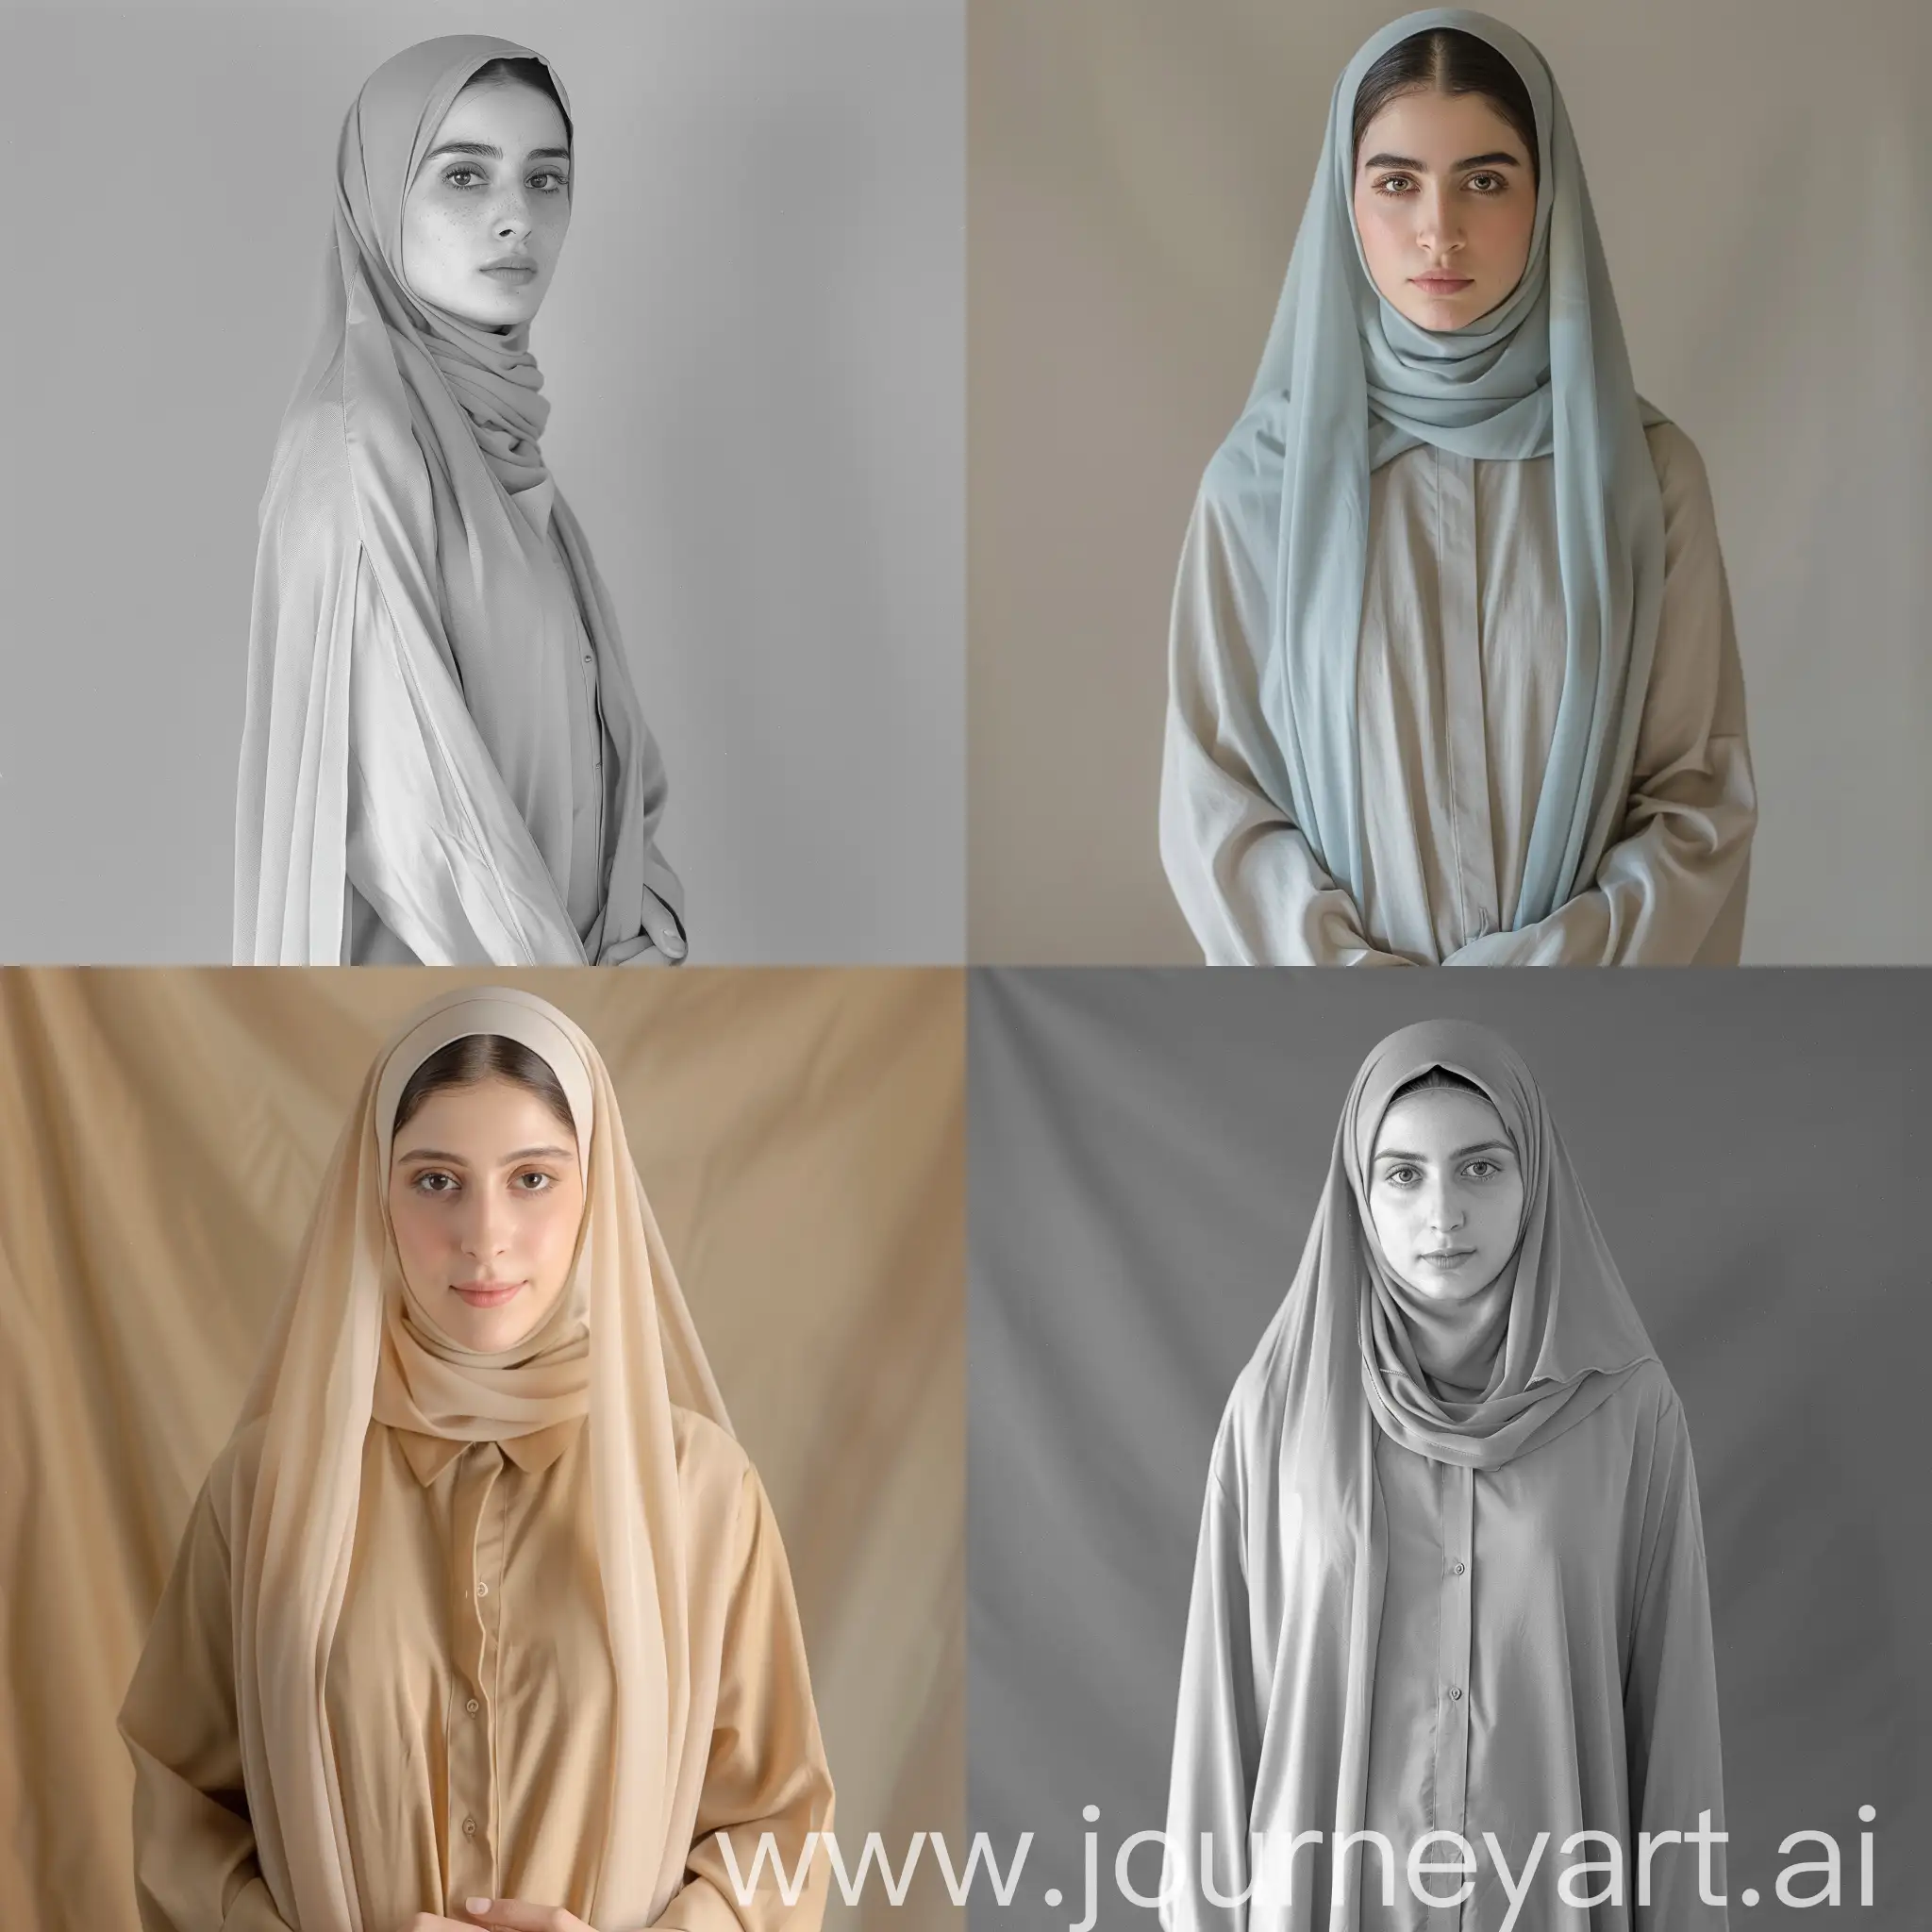 Devout-Muslim-Woman-in-Elegant-Veil-Pursuing-World-and-Theological-Studies